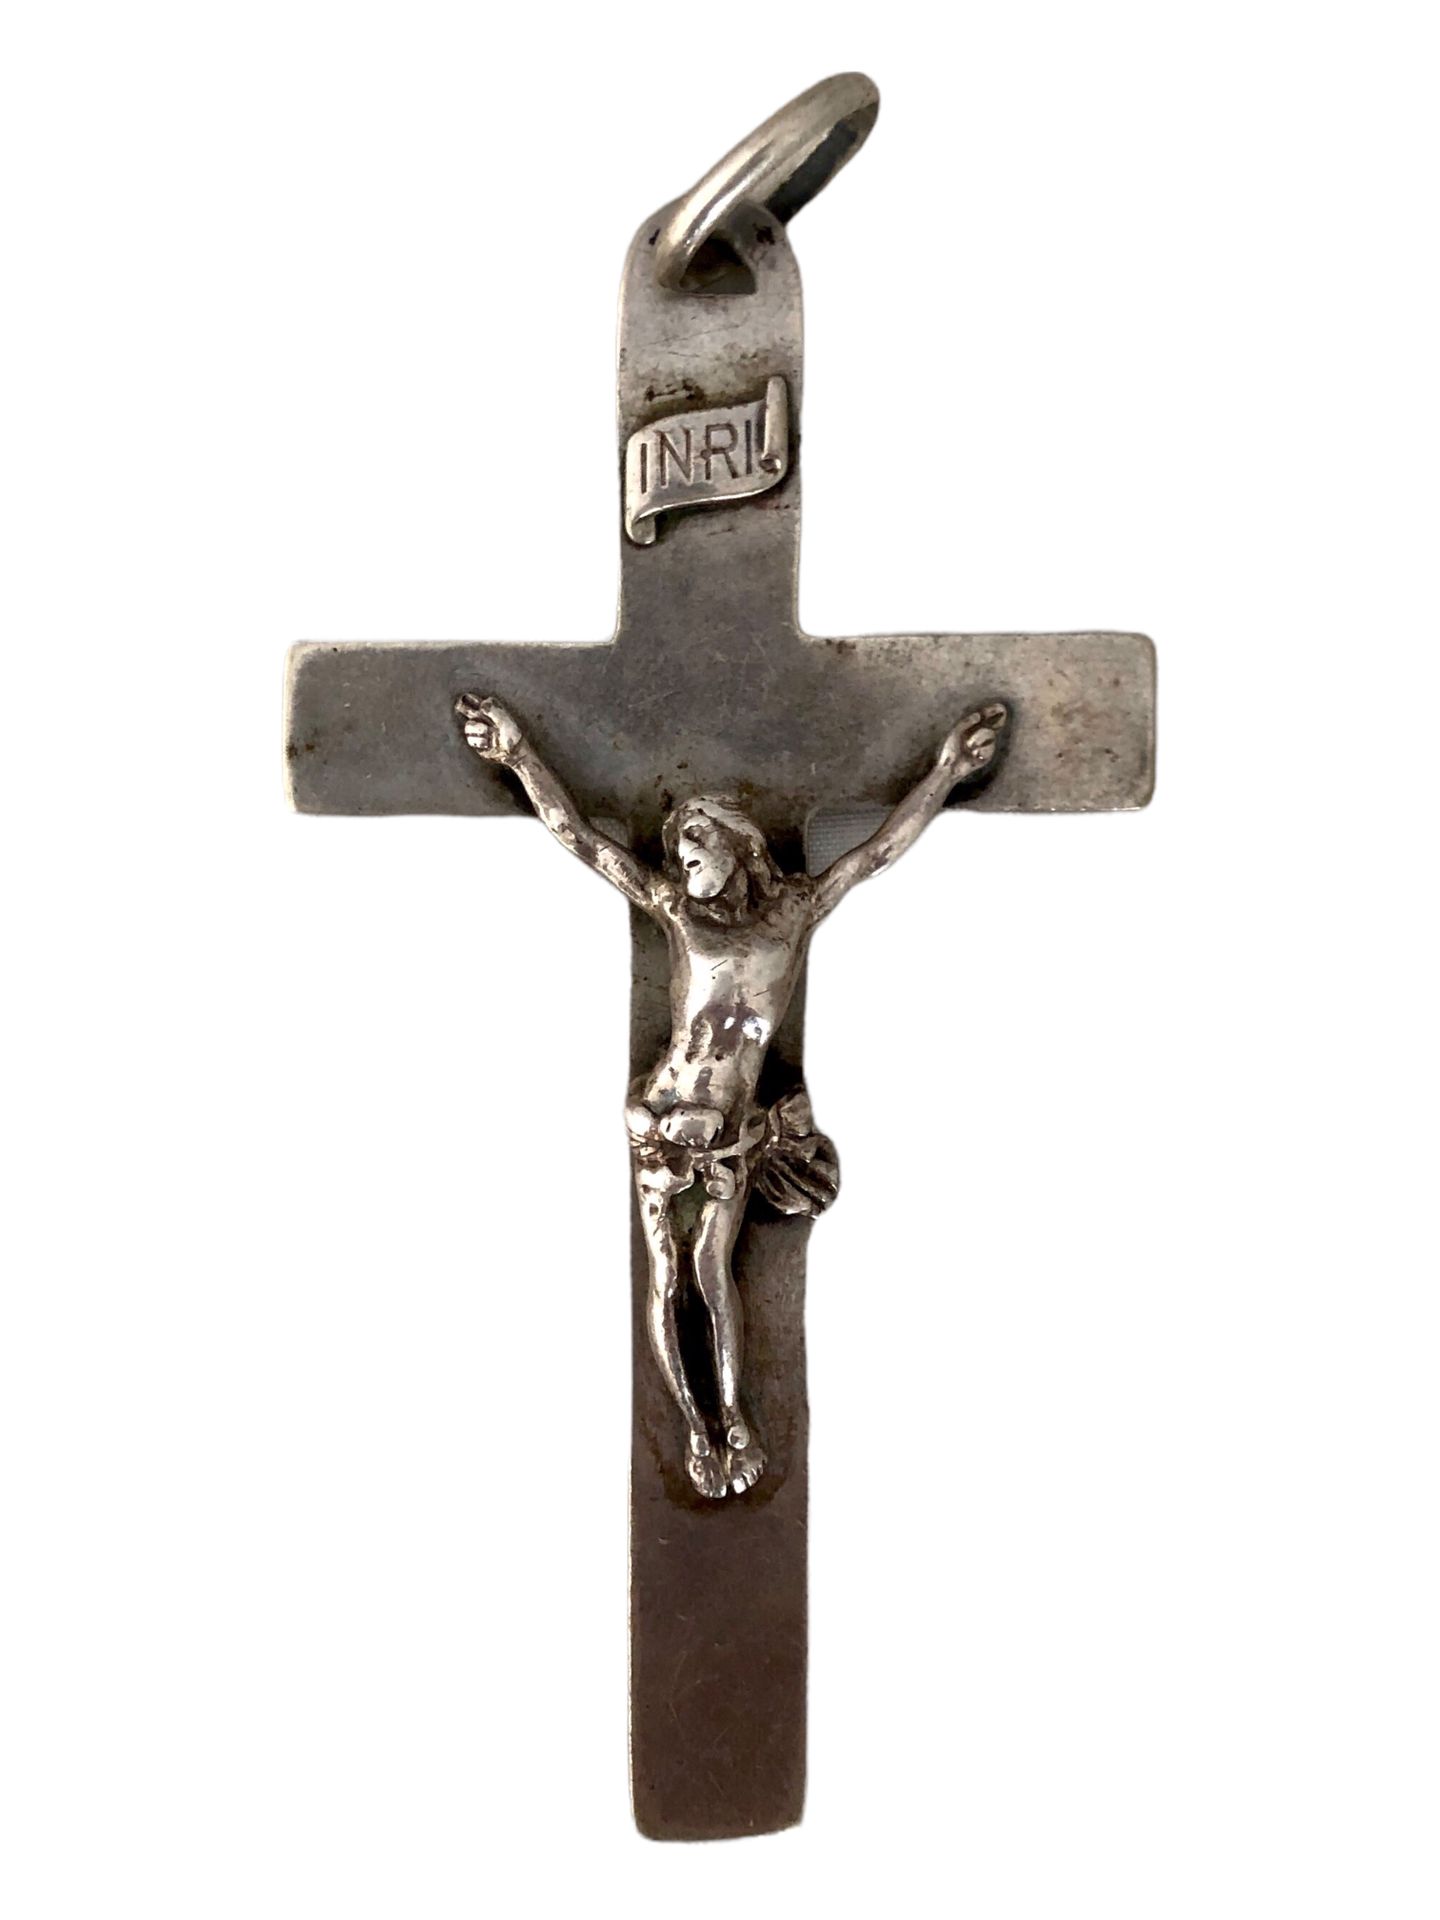 Null 尼姑的十字架

银质800°/00野猪头印章。

高10,1厘米。

长度：5.3厘米。

重量：37克。